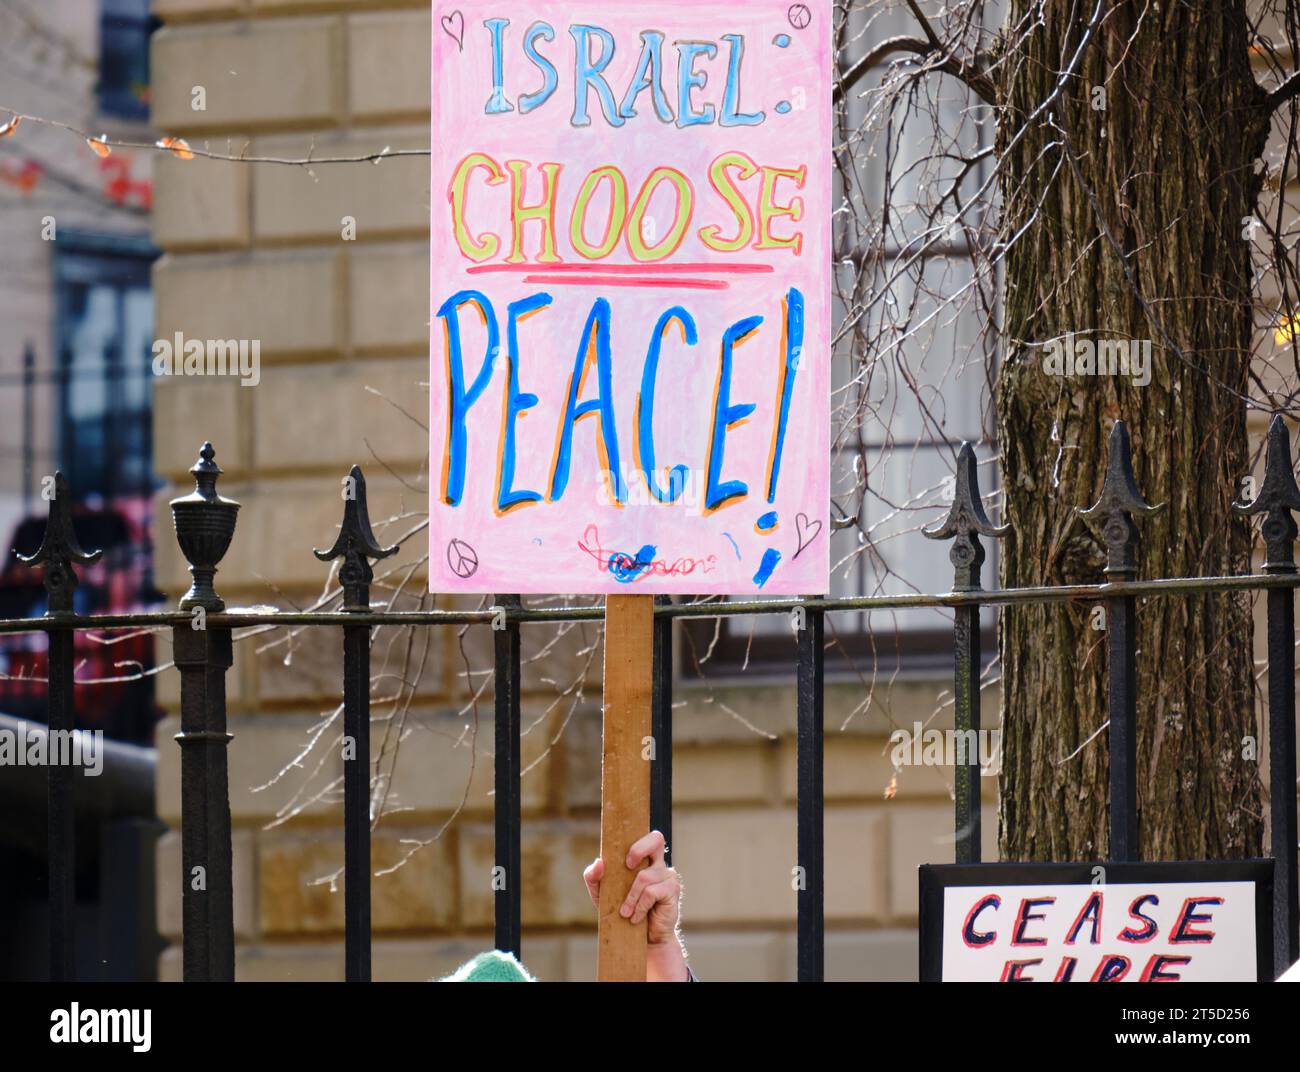 Halifax, Nova Scotia, Canada. November 4th, 2023. Israel Choose Peace sign at ceasefire in Palestine rally. Stock Photo